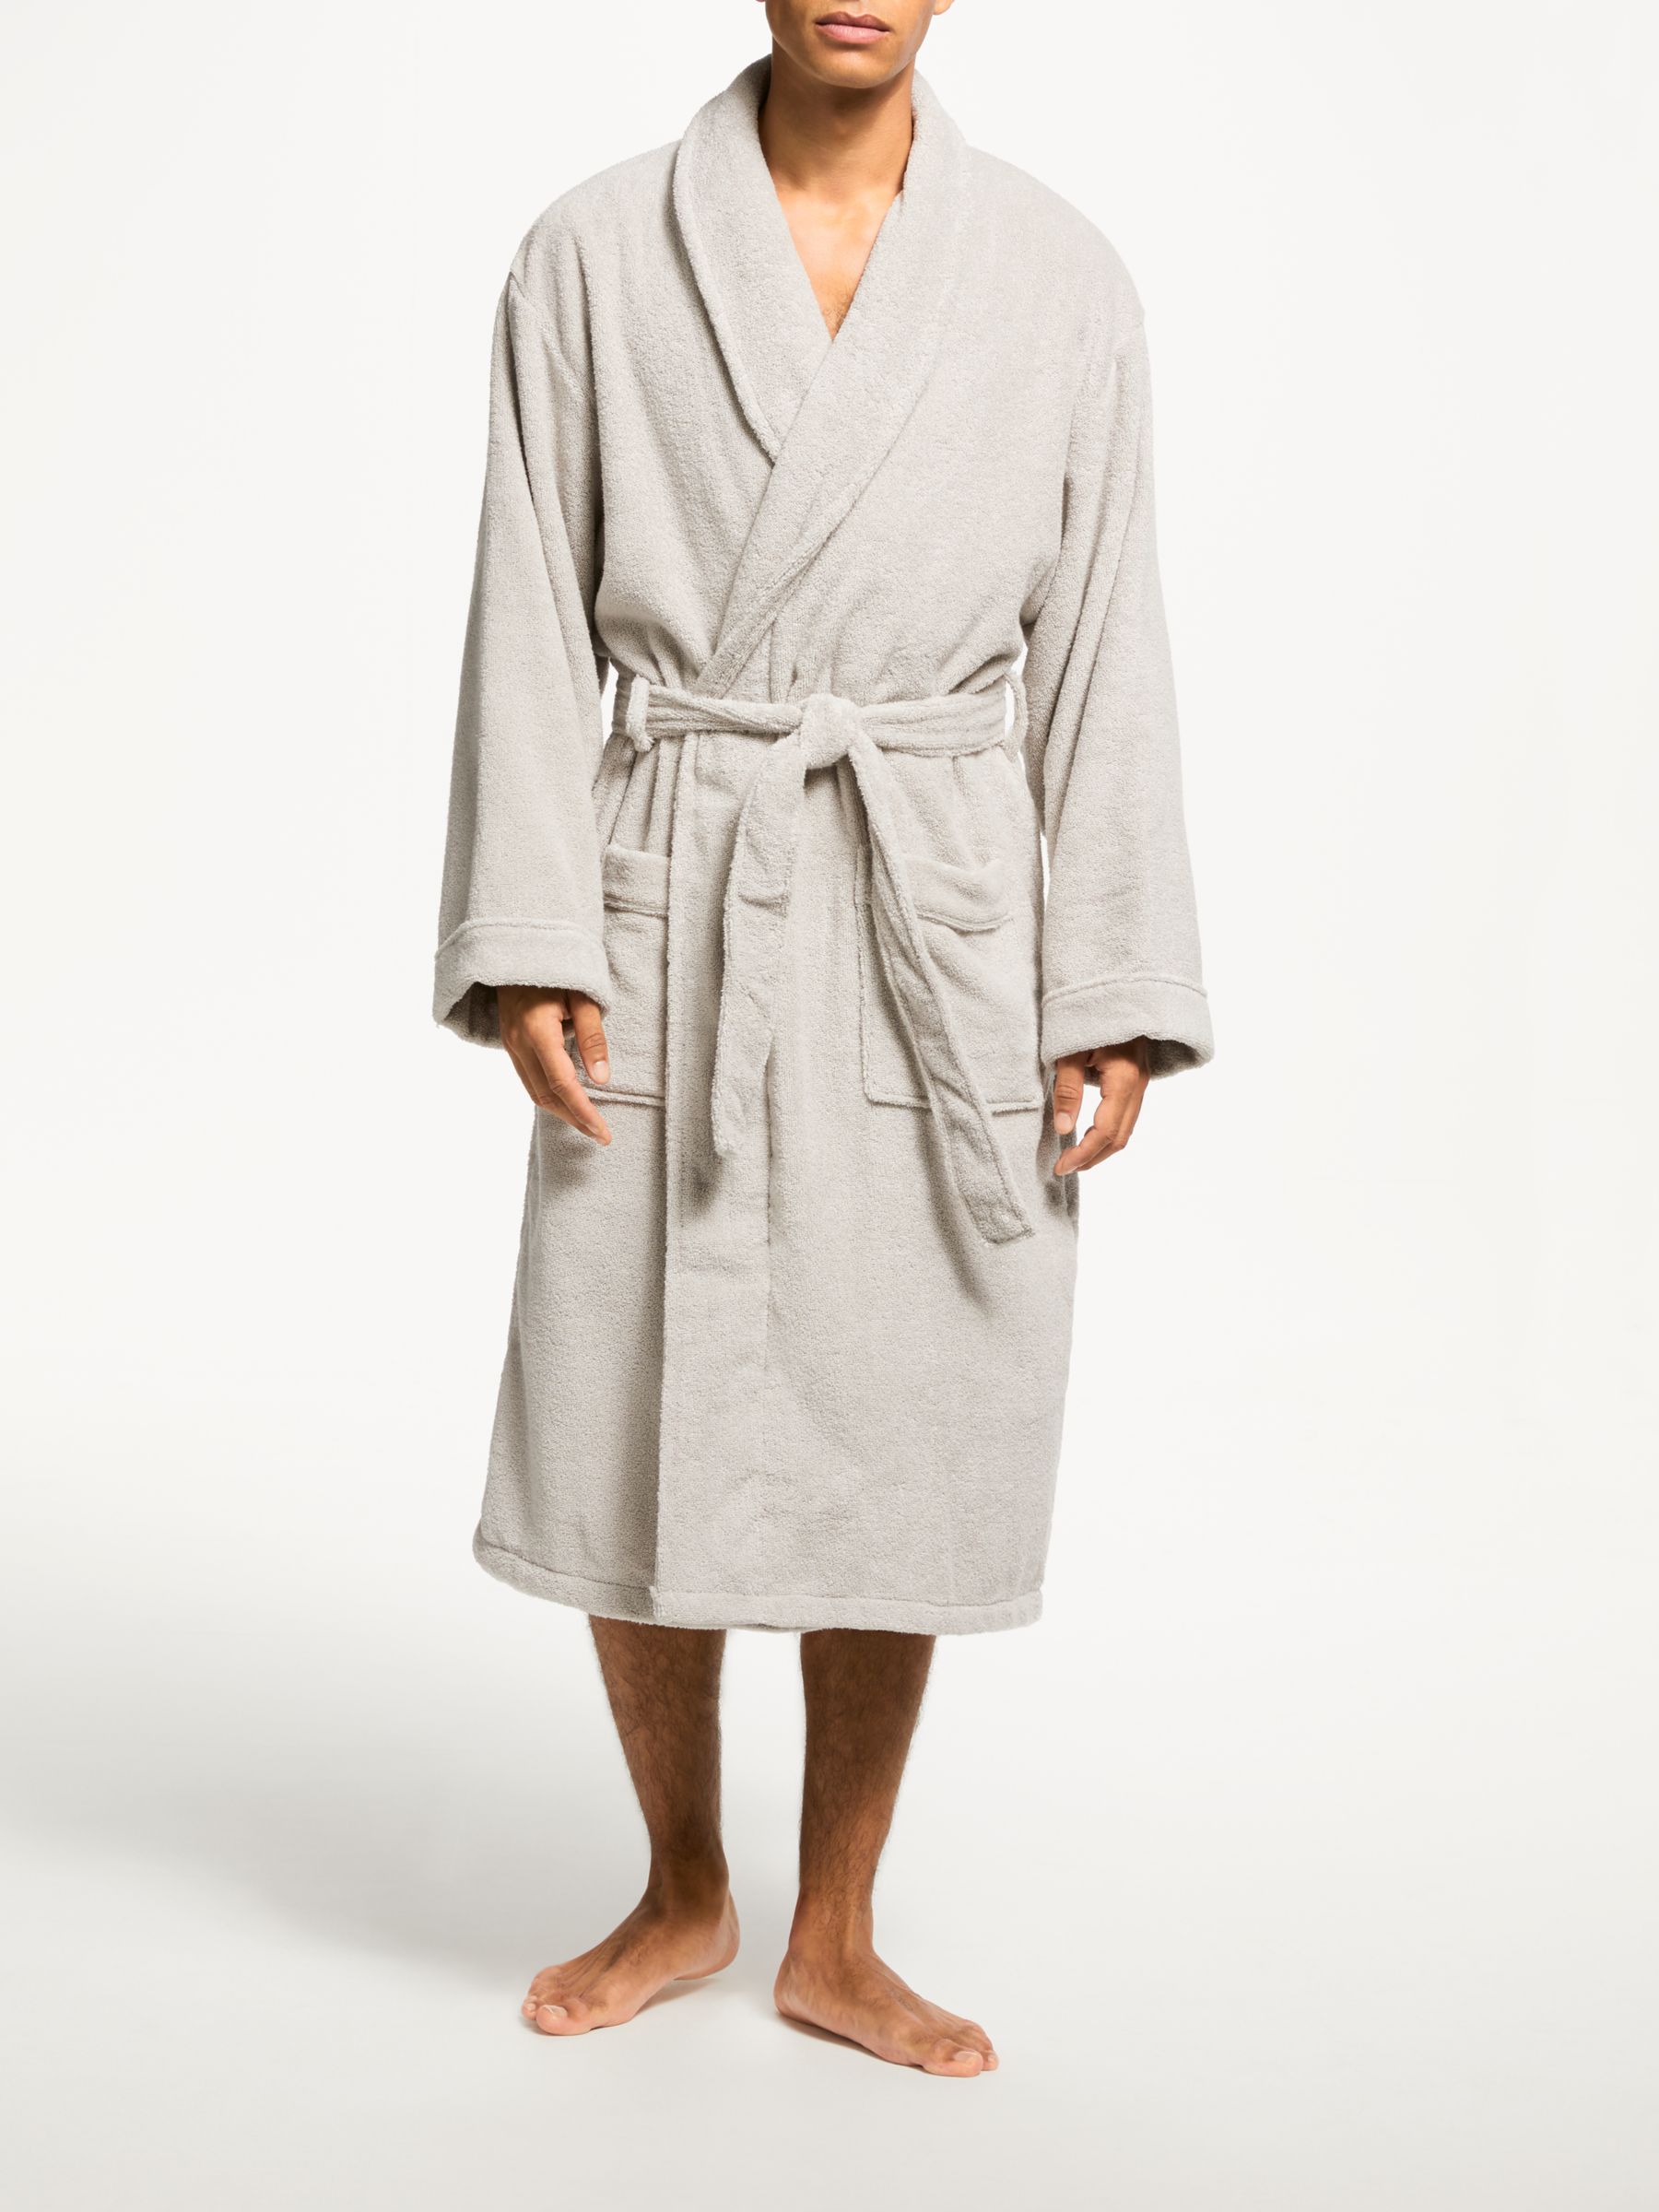 Robes & Dressing Gowns | Women's Nightwear | John Lewis